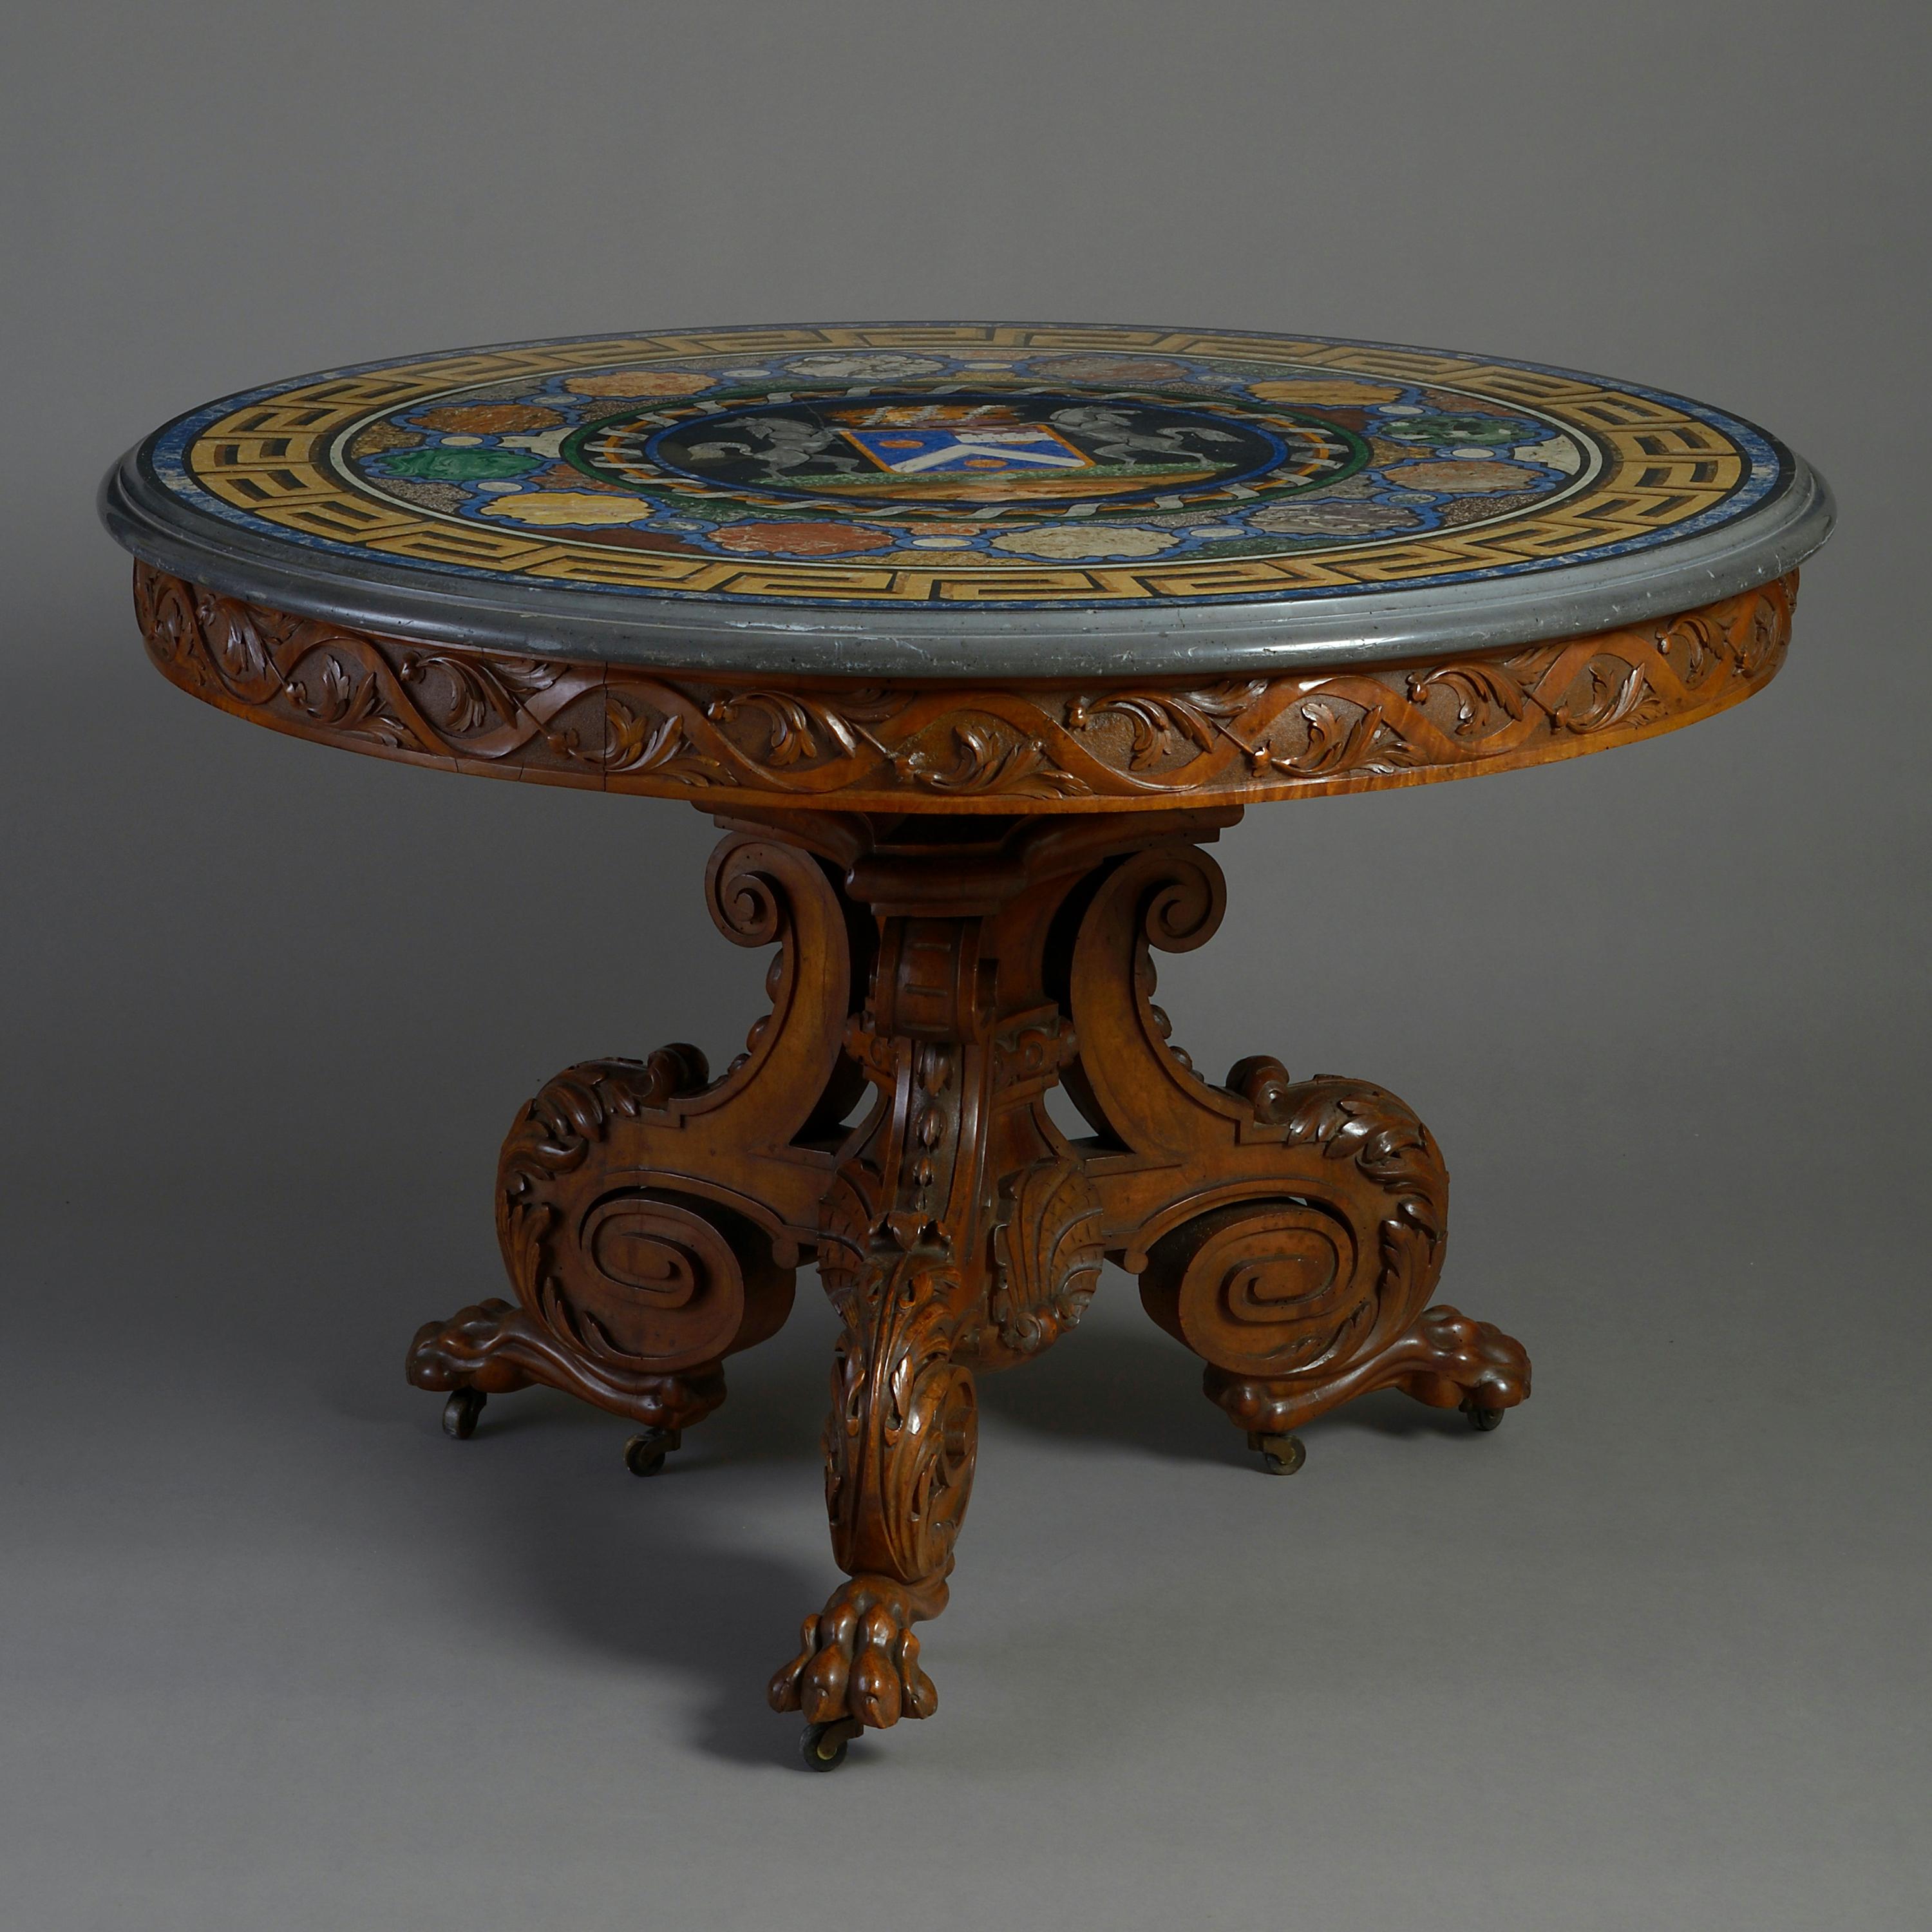 A fine southern French (Provençal) walnut and scagliola centre table, circa 1850.